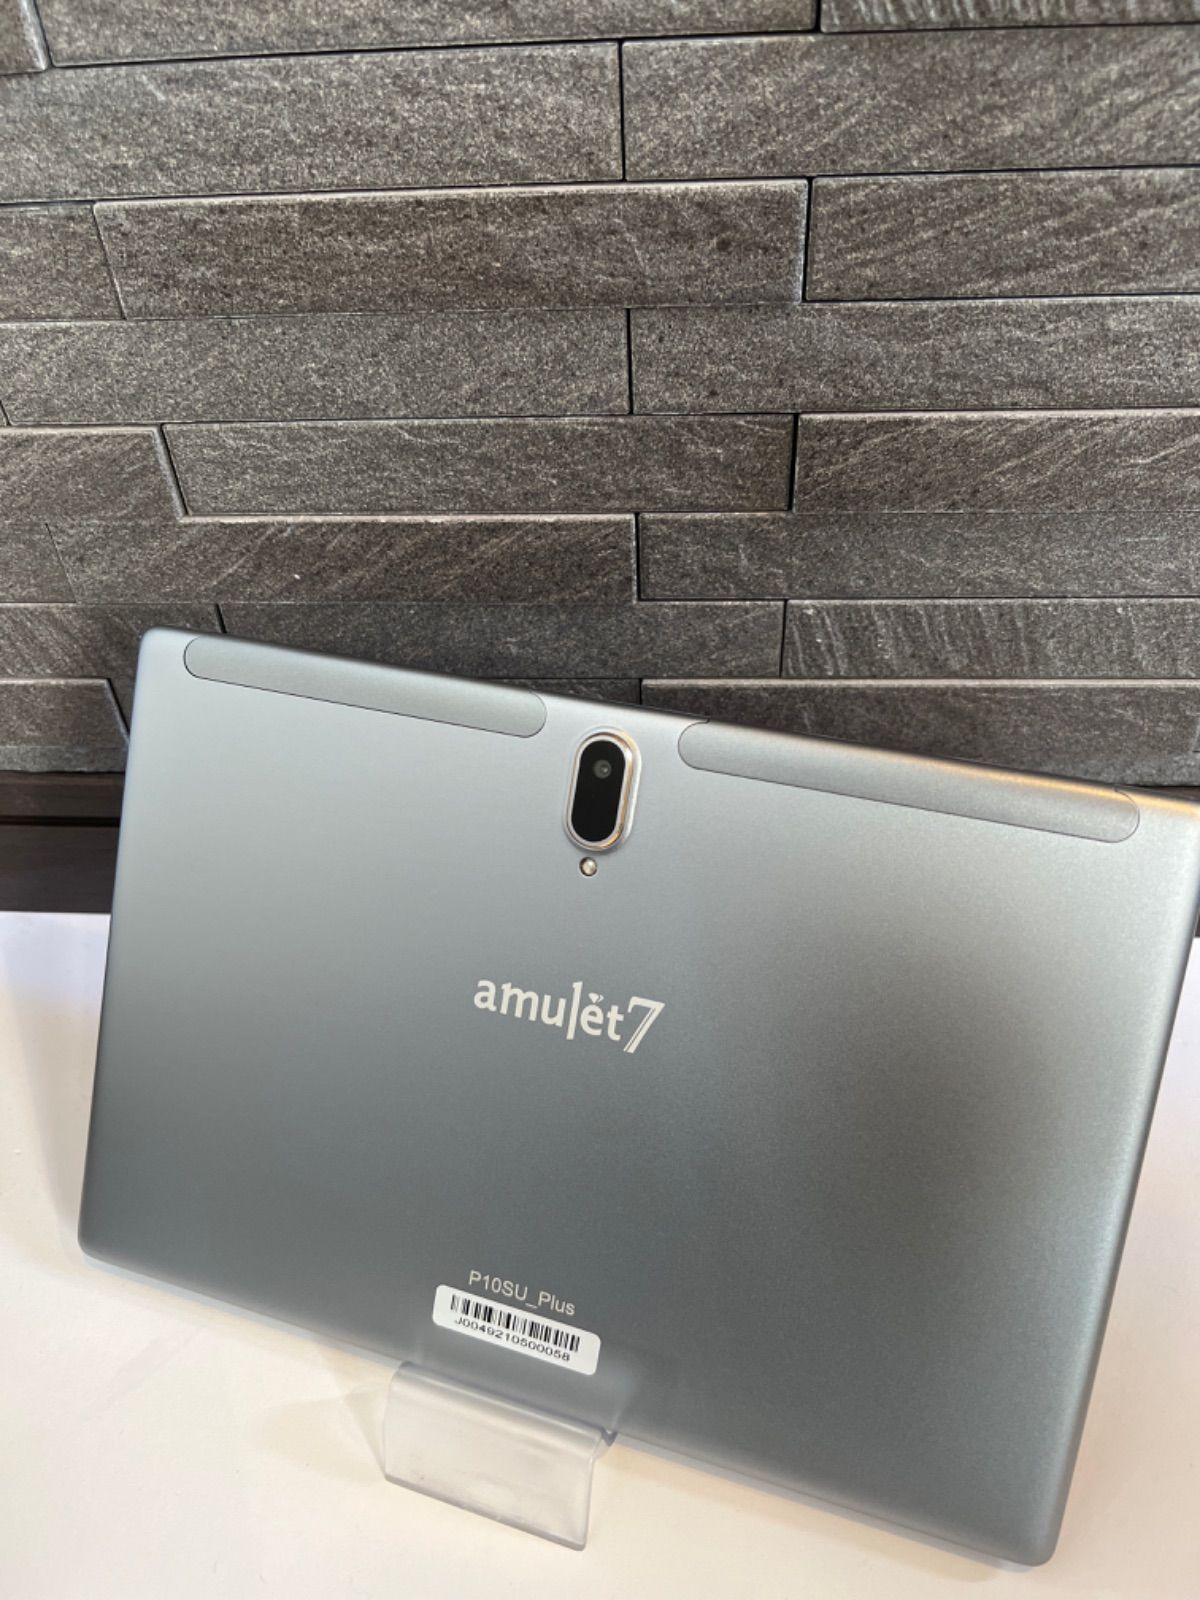 amulet7 10.1インチタブレット型PC P10SU_Plus - メルカリ